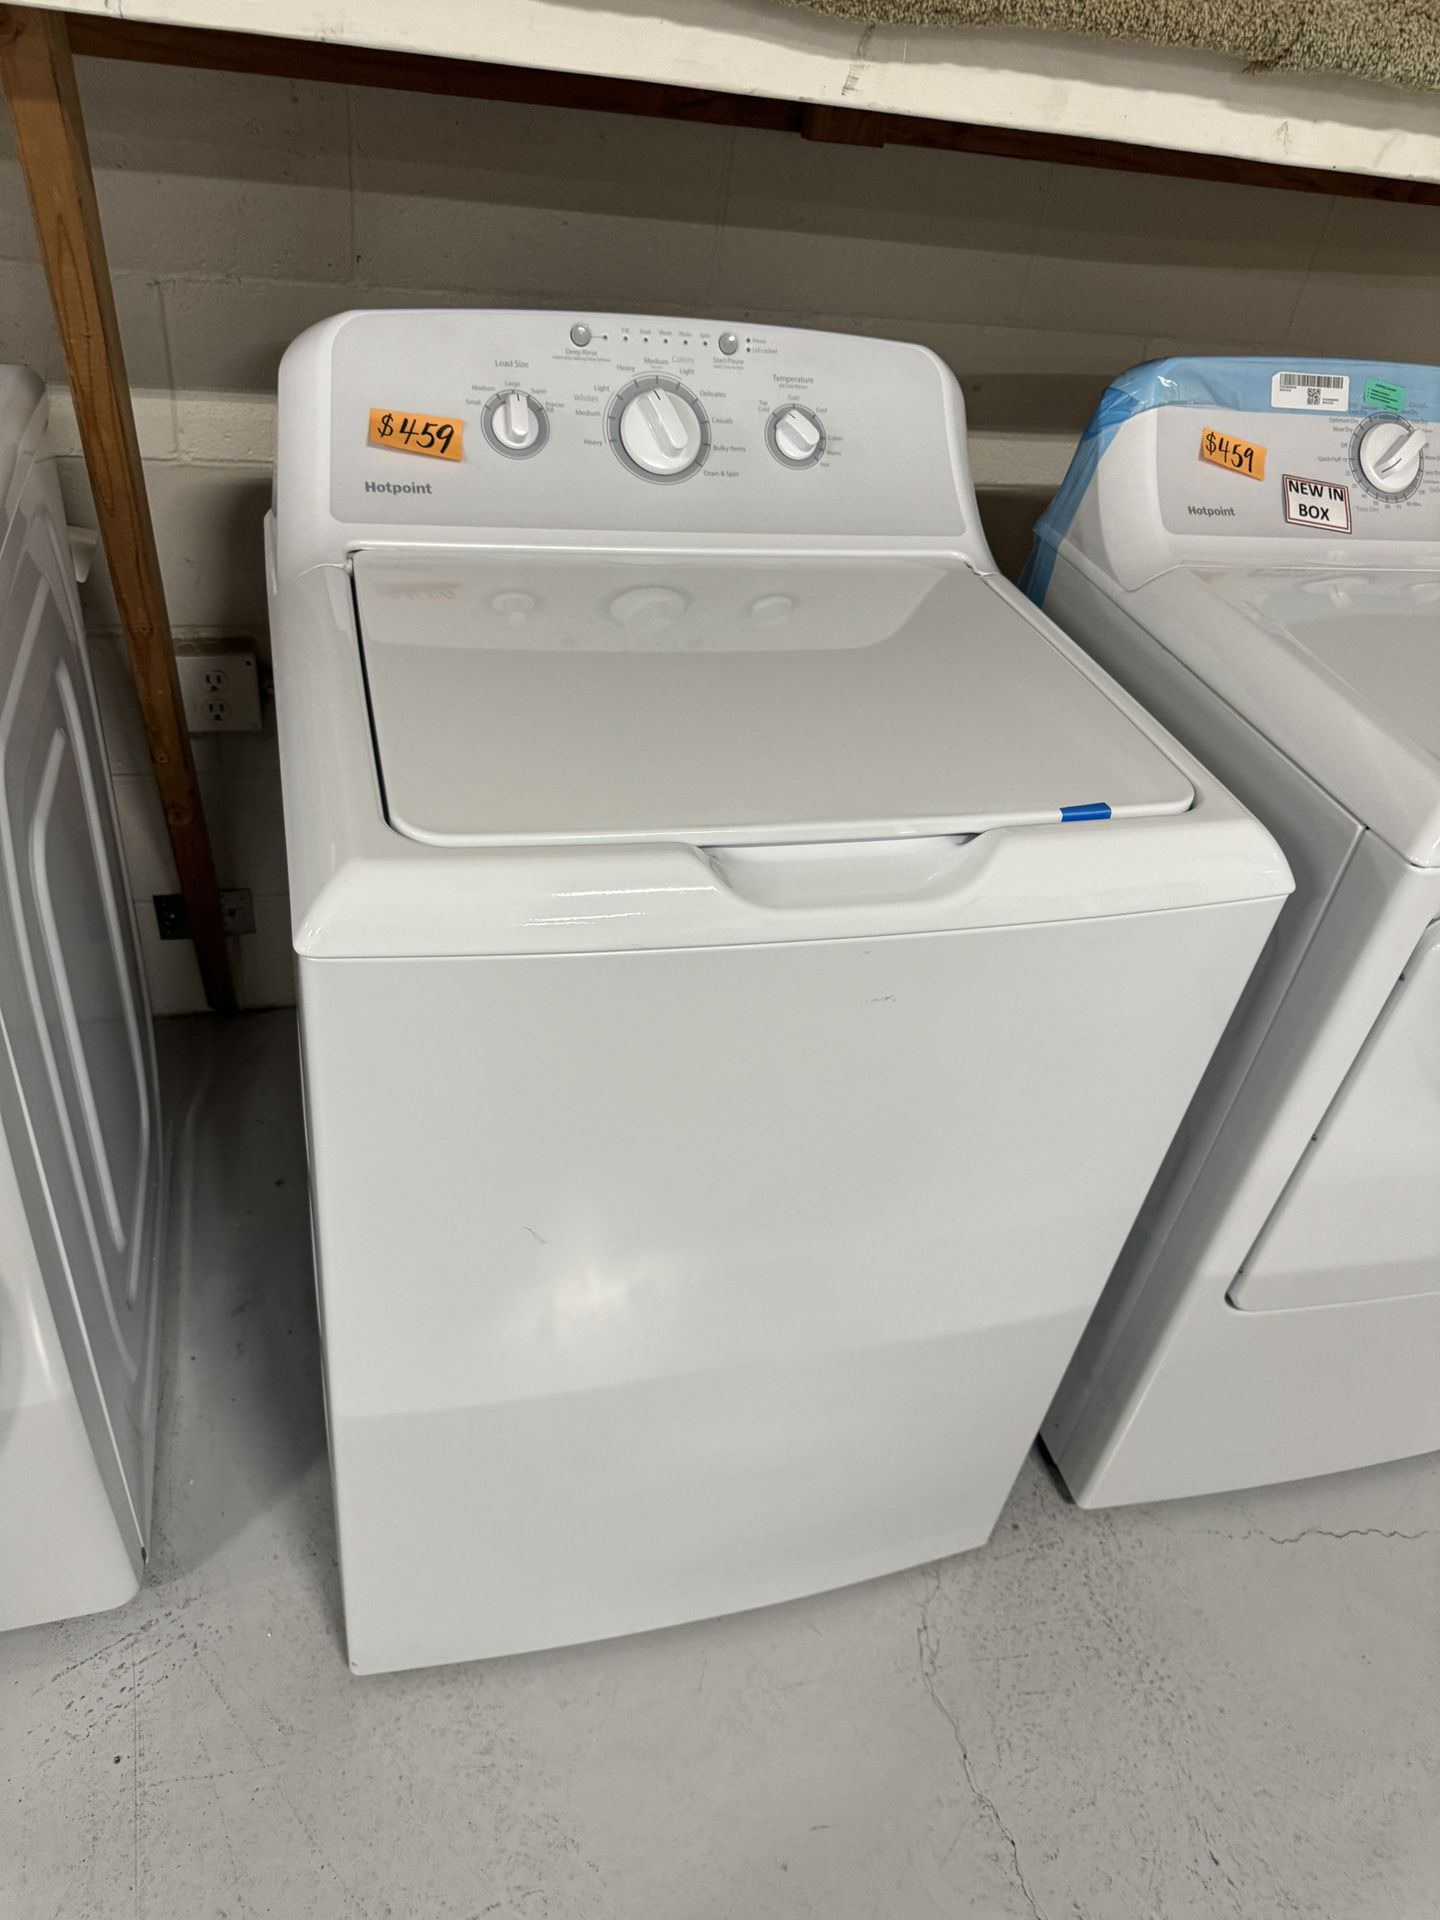 Brand New Washer GE Top Load Washing Machine In Box 